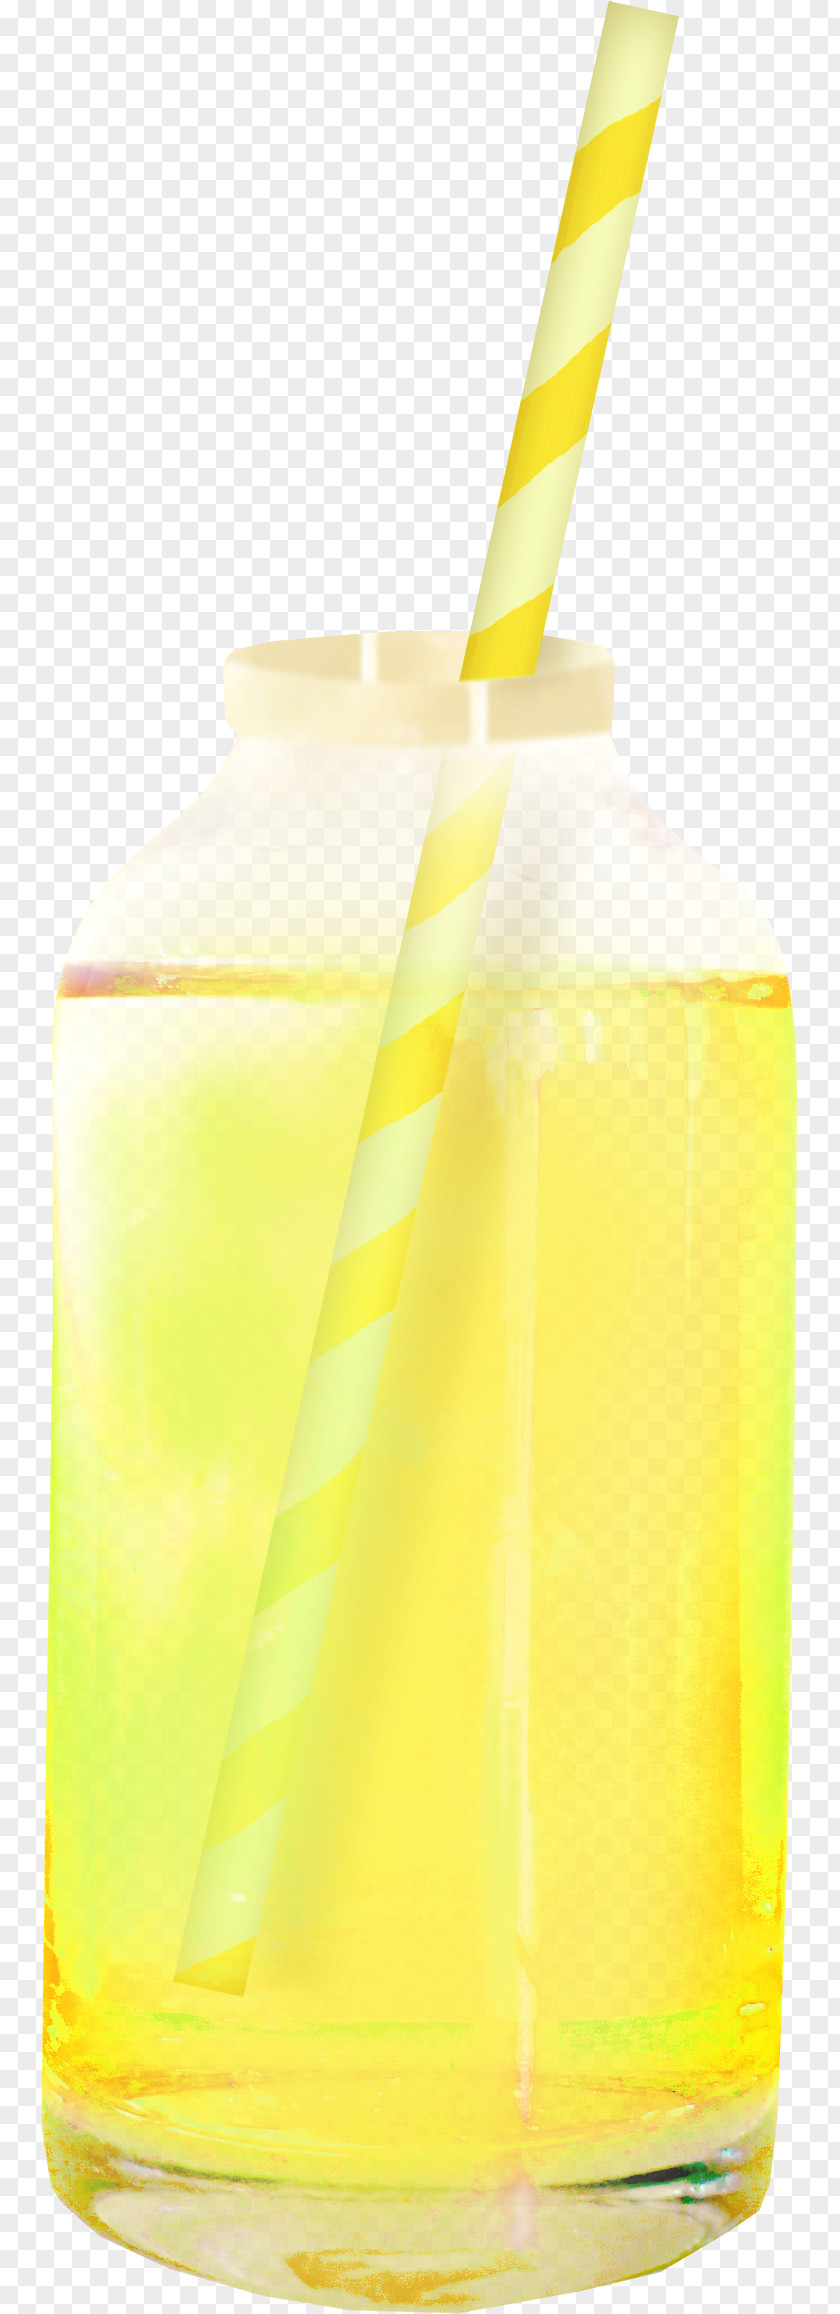 Creative Orange Drink Cup Harvey Wallbanger Juice Lemonade Non-alcoholic PNG